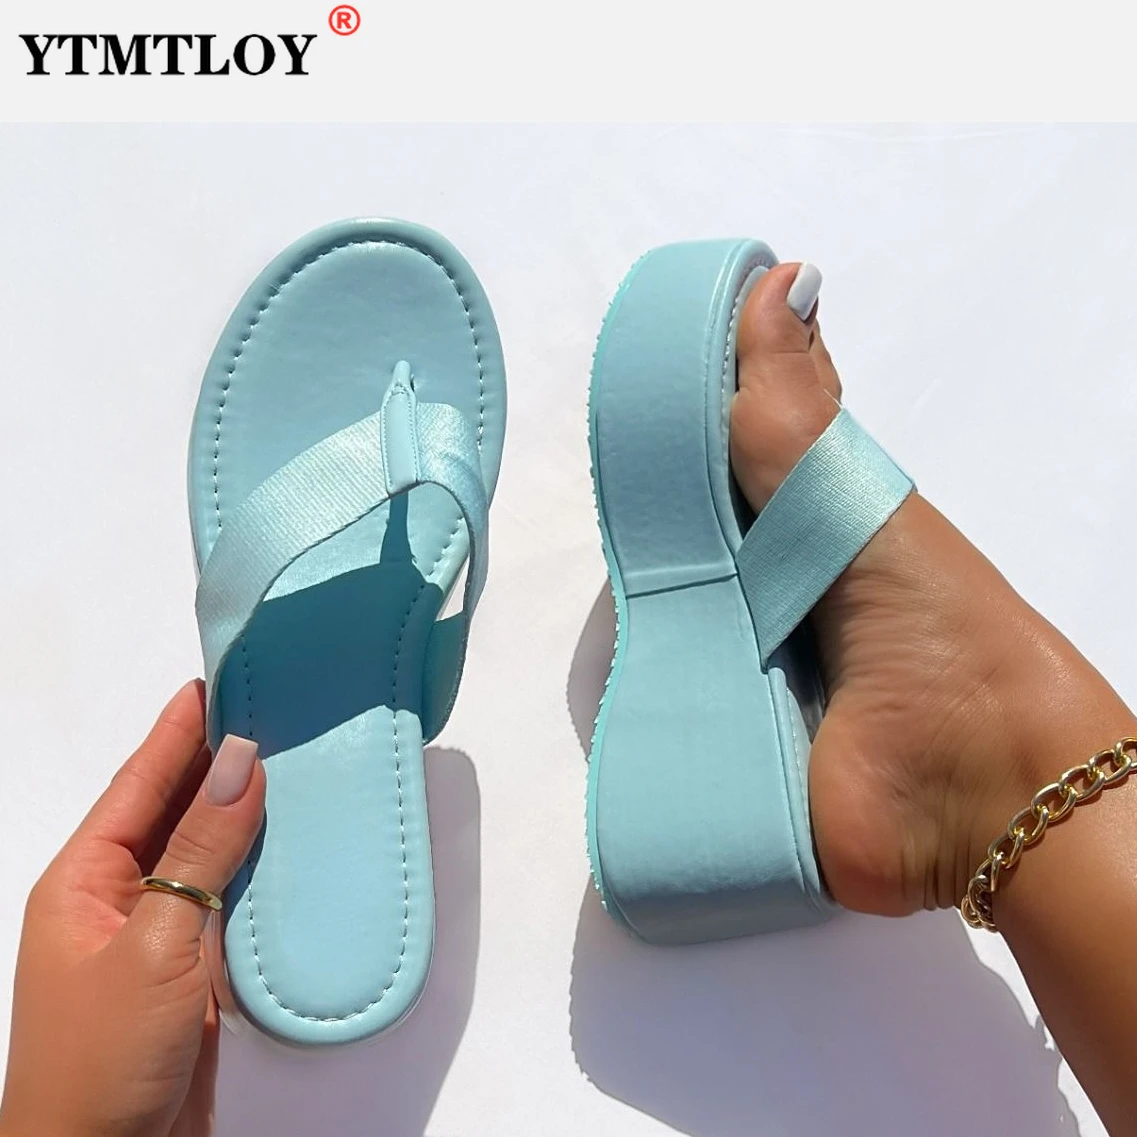 

Platform Wedges Sandals For Women Flip Flop Ankle Lace Up Metal Design Fashion Roman Retro High Heels Comfy Casual Shoes